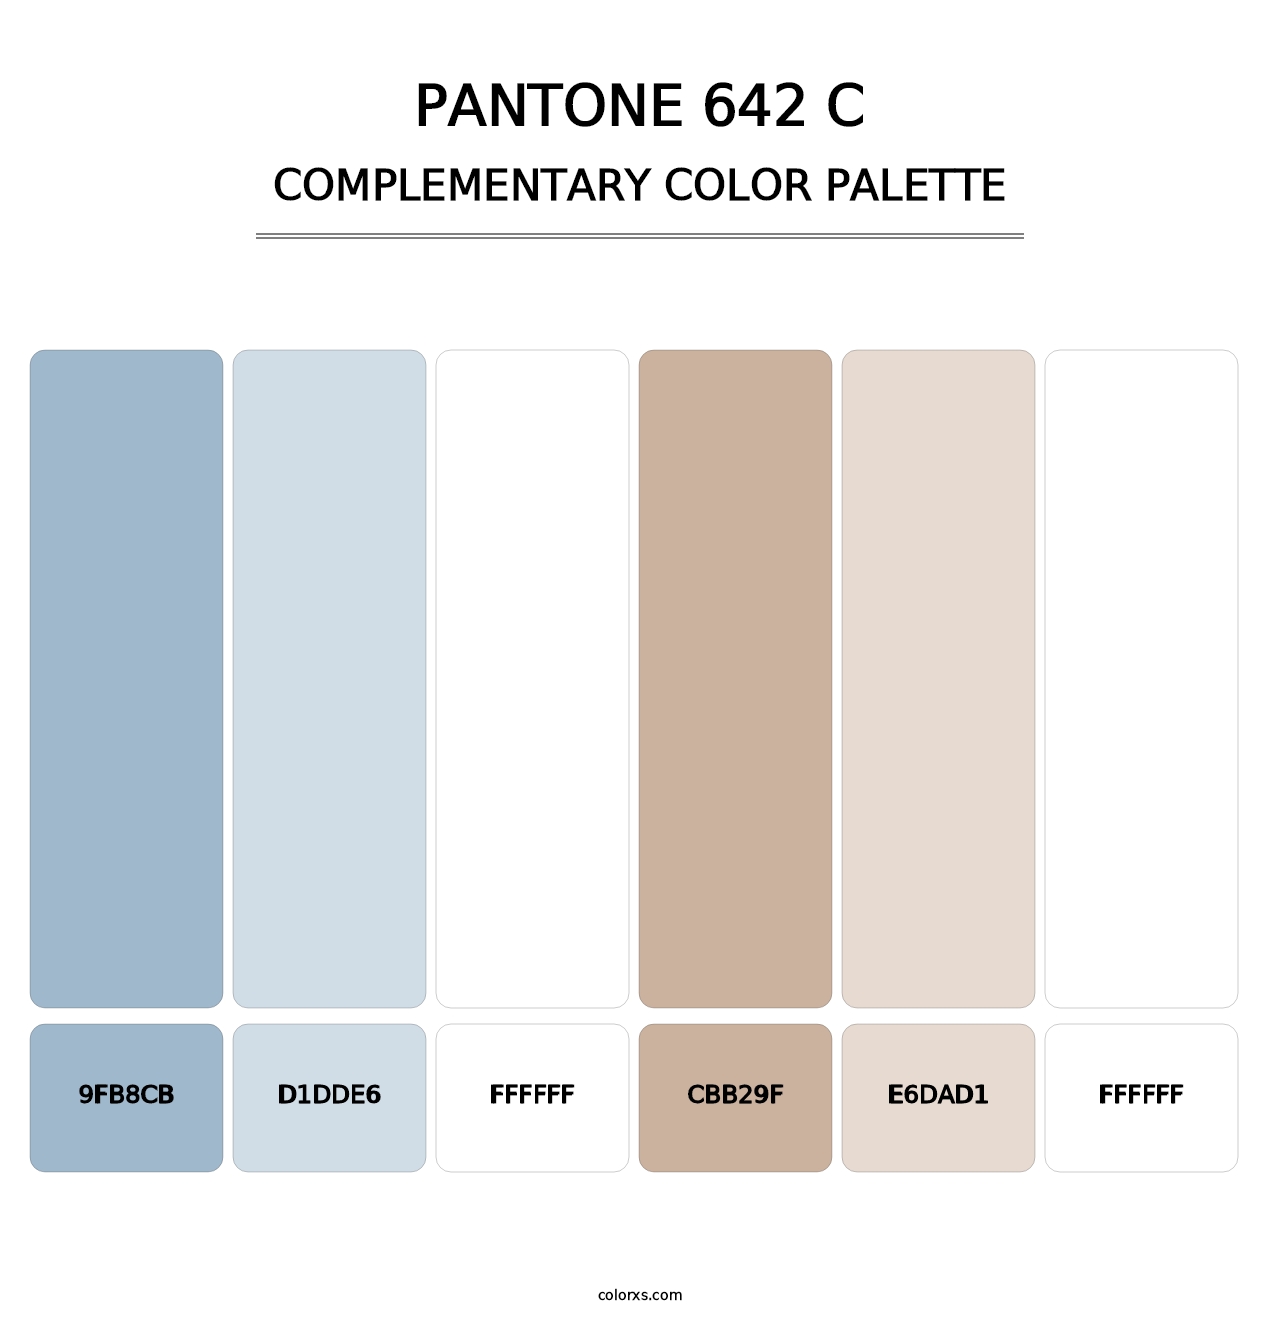 PANTONE 642 C - Complementary Color Palette